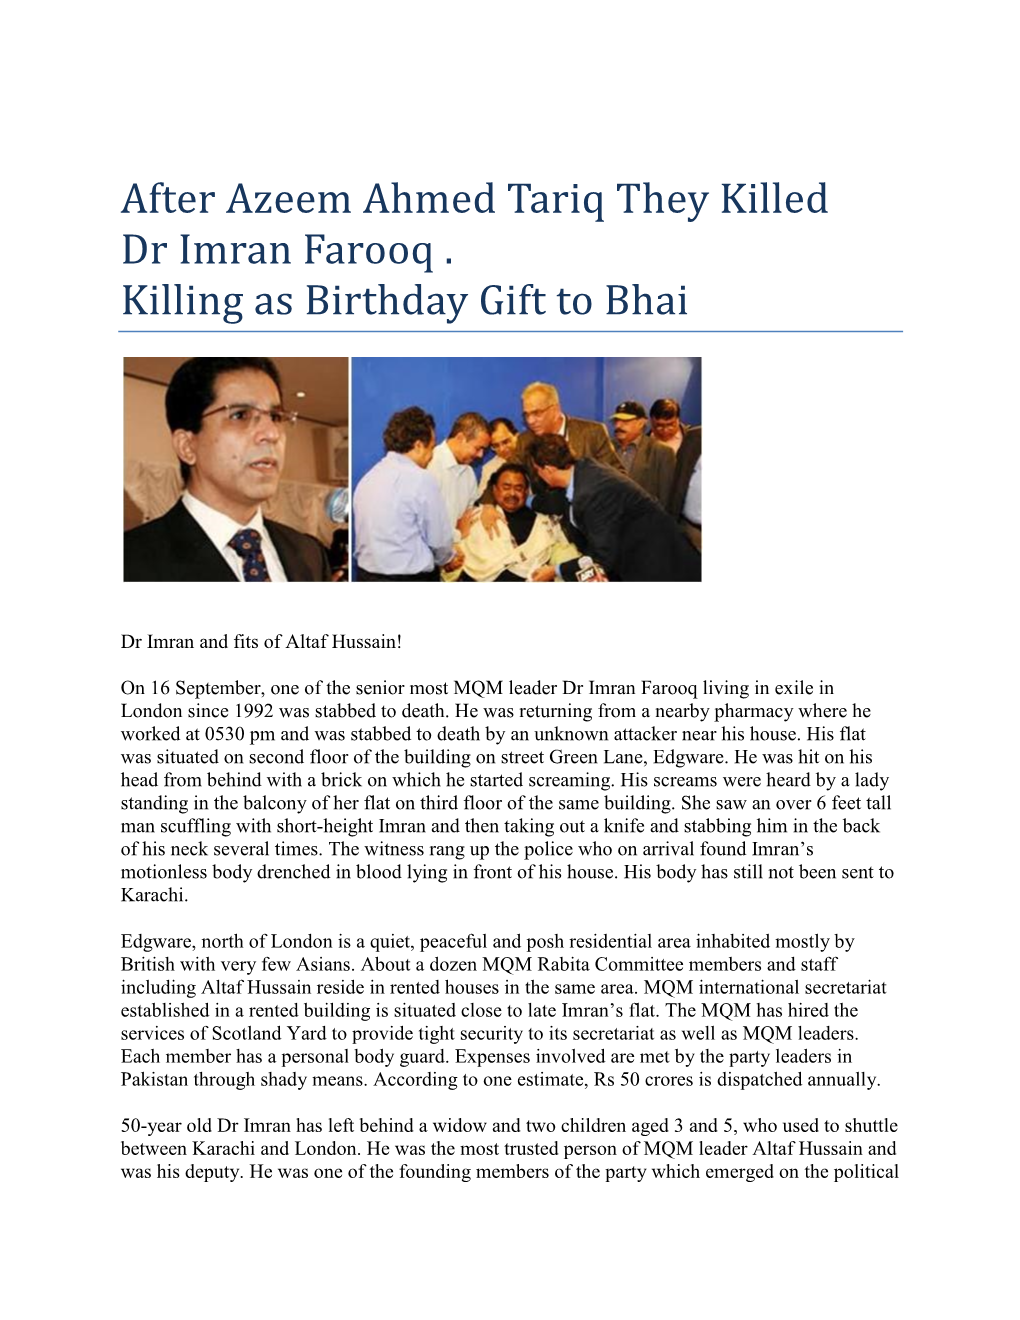 After Azeem Ahmed Tariq They Killed Dr Imran Farooq . Killing As Birthday Gift to Bhai